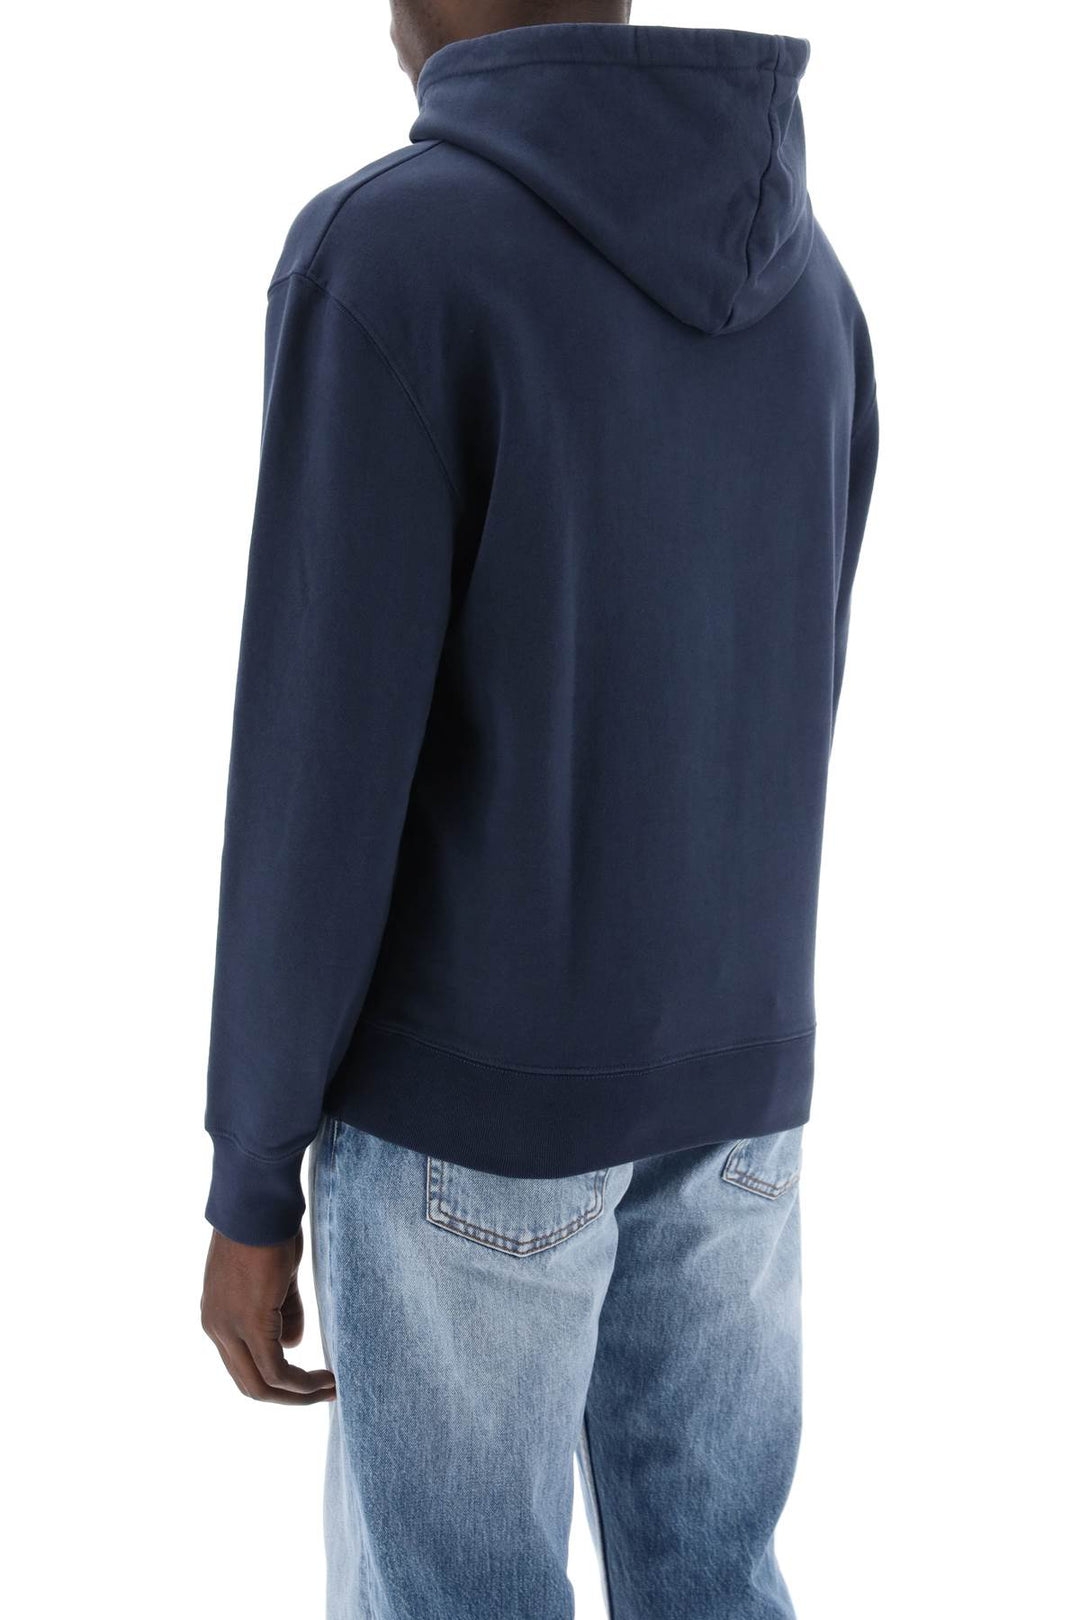 Maison Kitsune Chillax Fox Hooded Sweatshirt   Blu